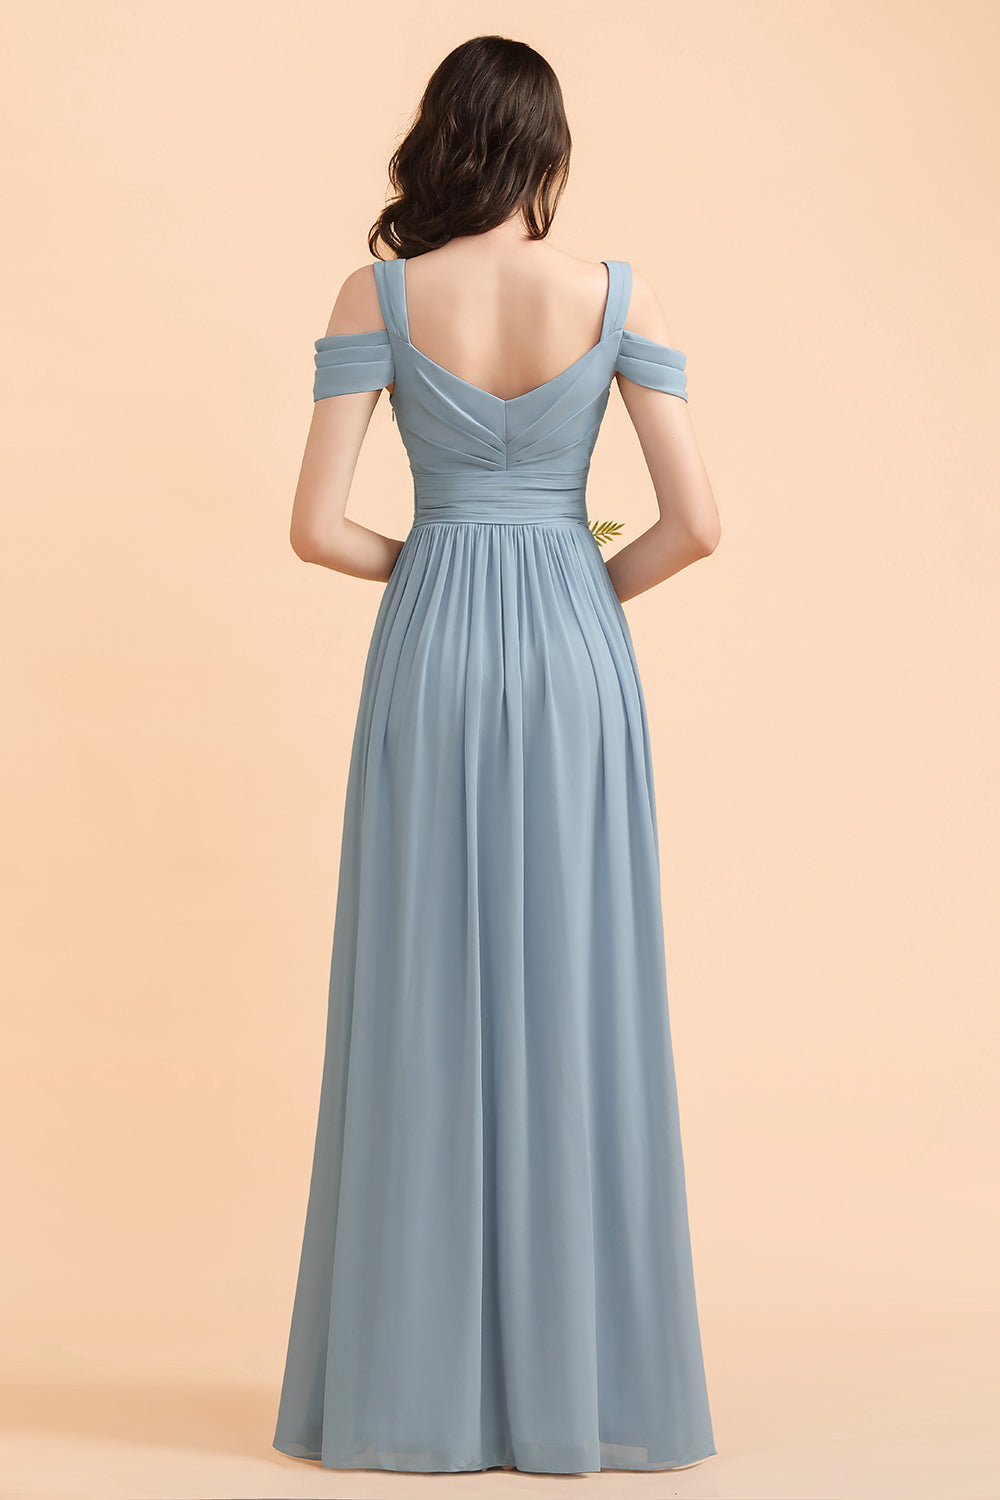 Long Chiffon Off-the-Shoulder Sweetheart Grey Blue Bridesmaid Dress With Slit-BIZTUNNEL